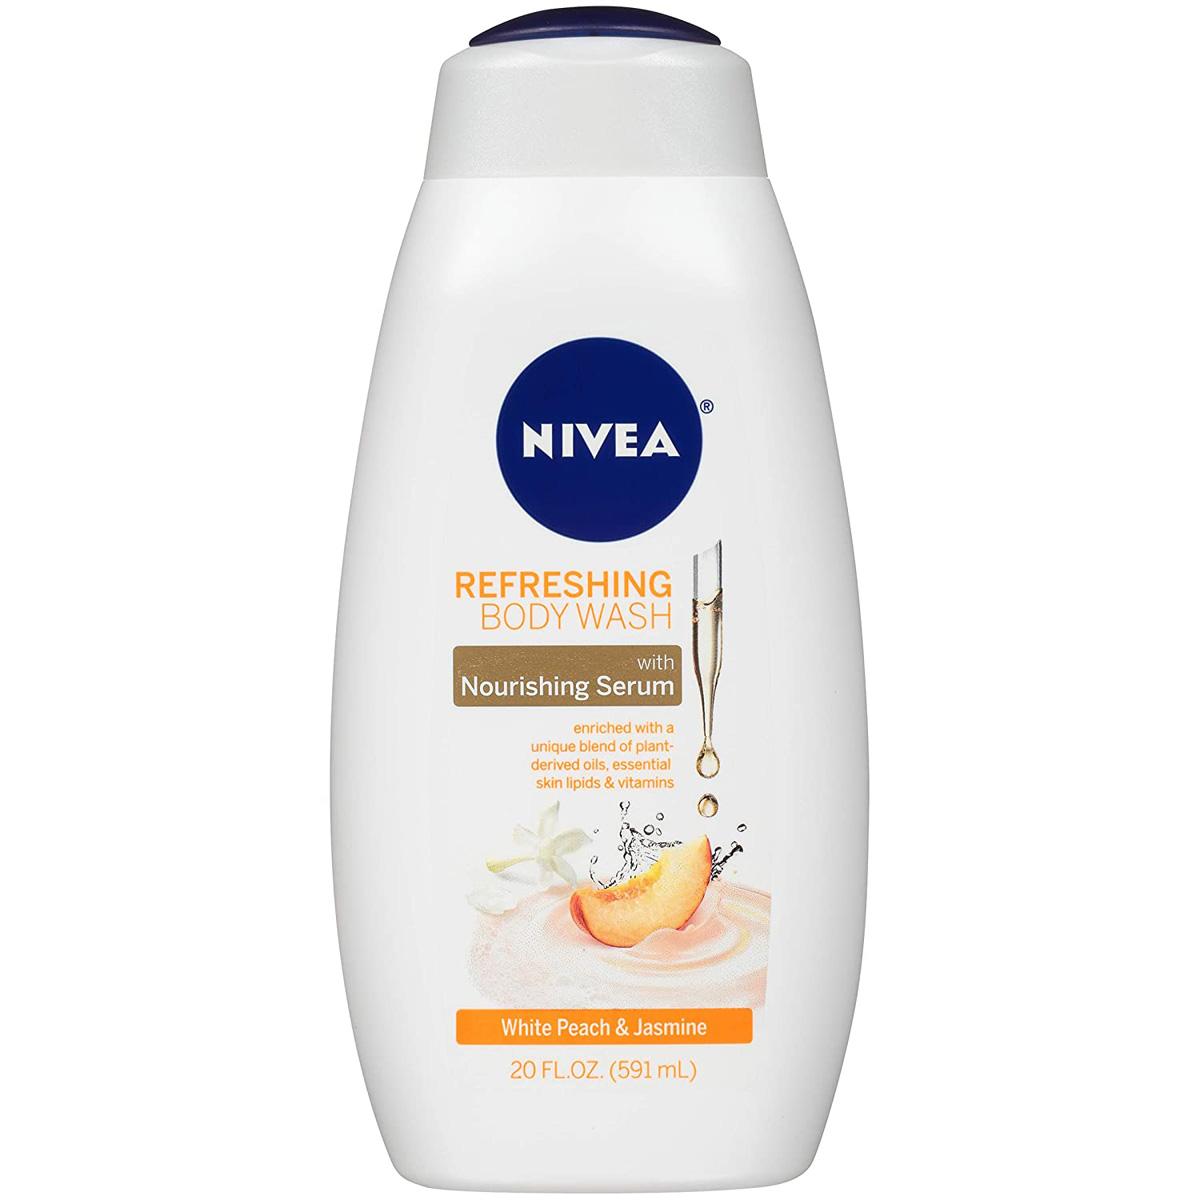 NIVEA Nourishing Serum White Peach Body Wash for $3.07 Shipped